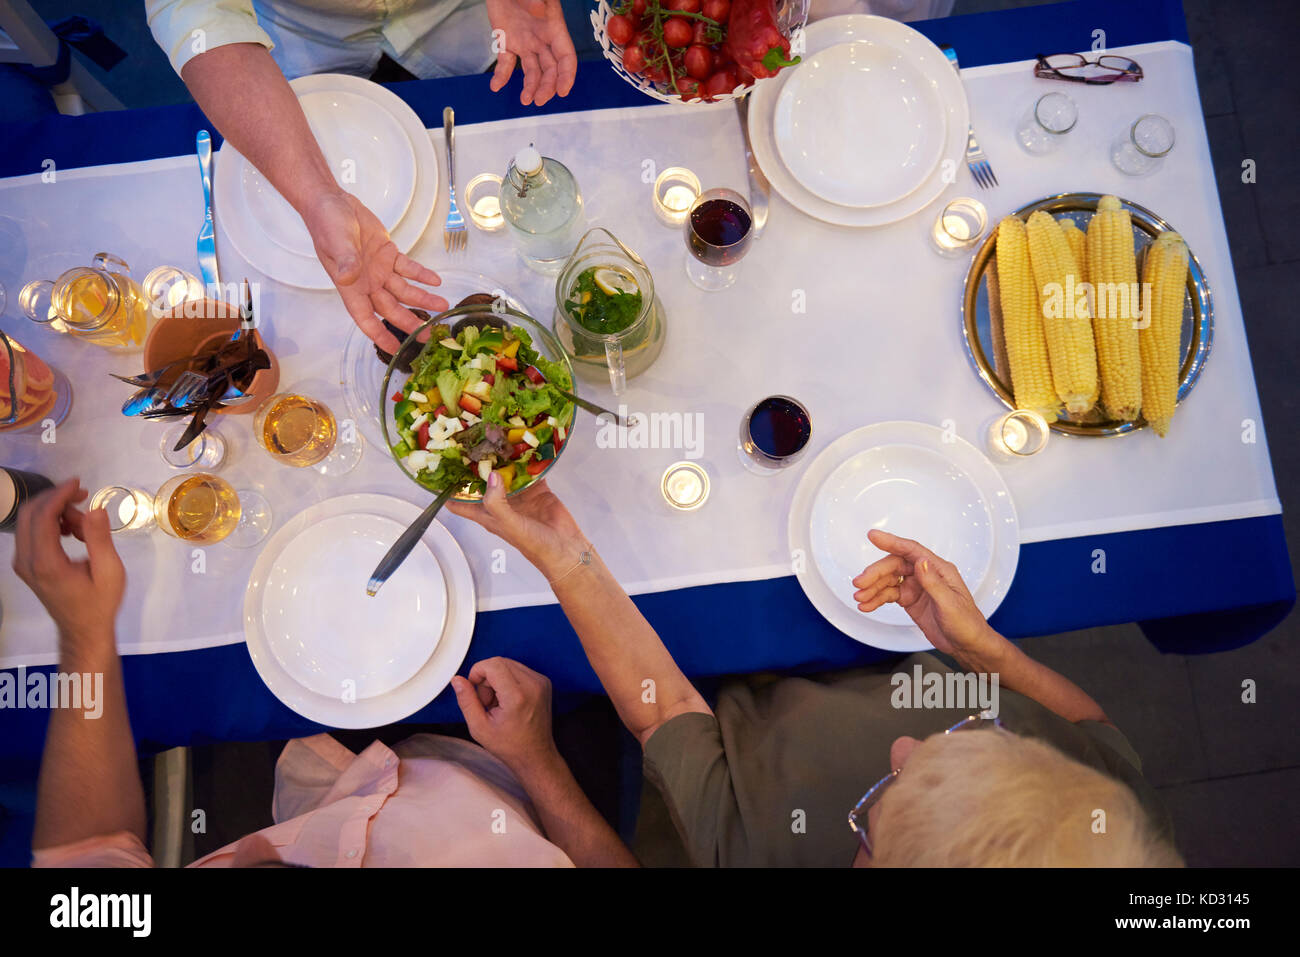 Grupo de gente sentada a la mesa, a punto de servir comida, vista superior Foto de stock